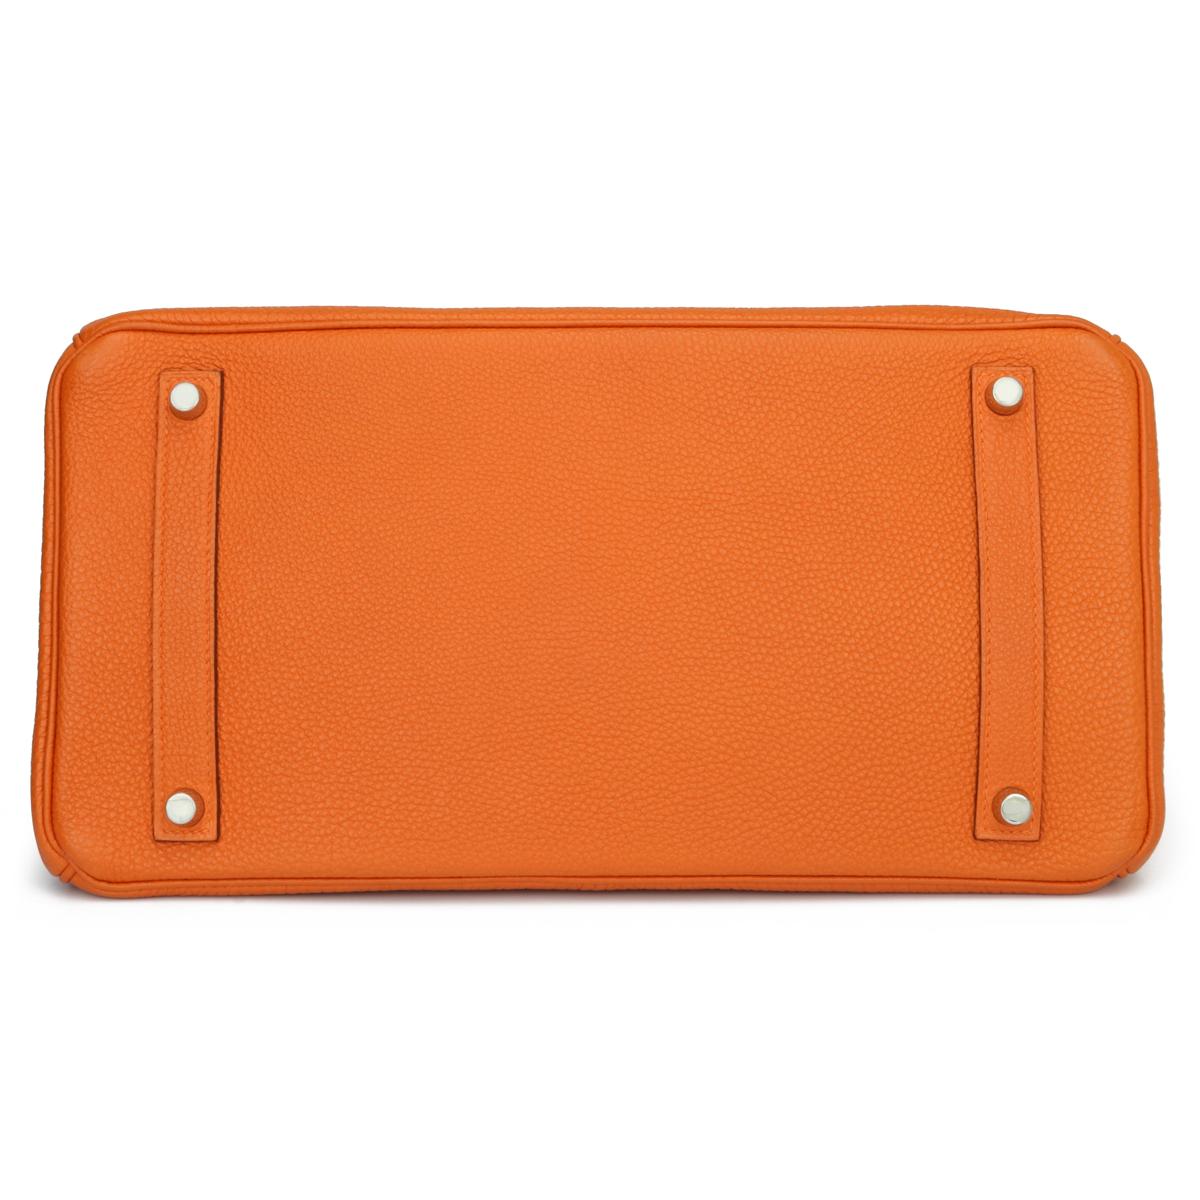 Hermès Birkin 35cm Bag Orange Togo Leather Palladium Hardware Stamp N Year 2010 1